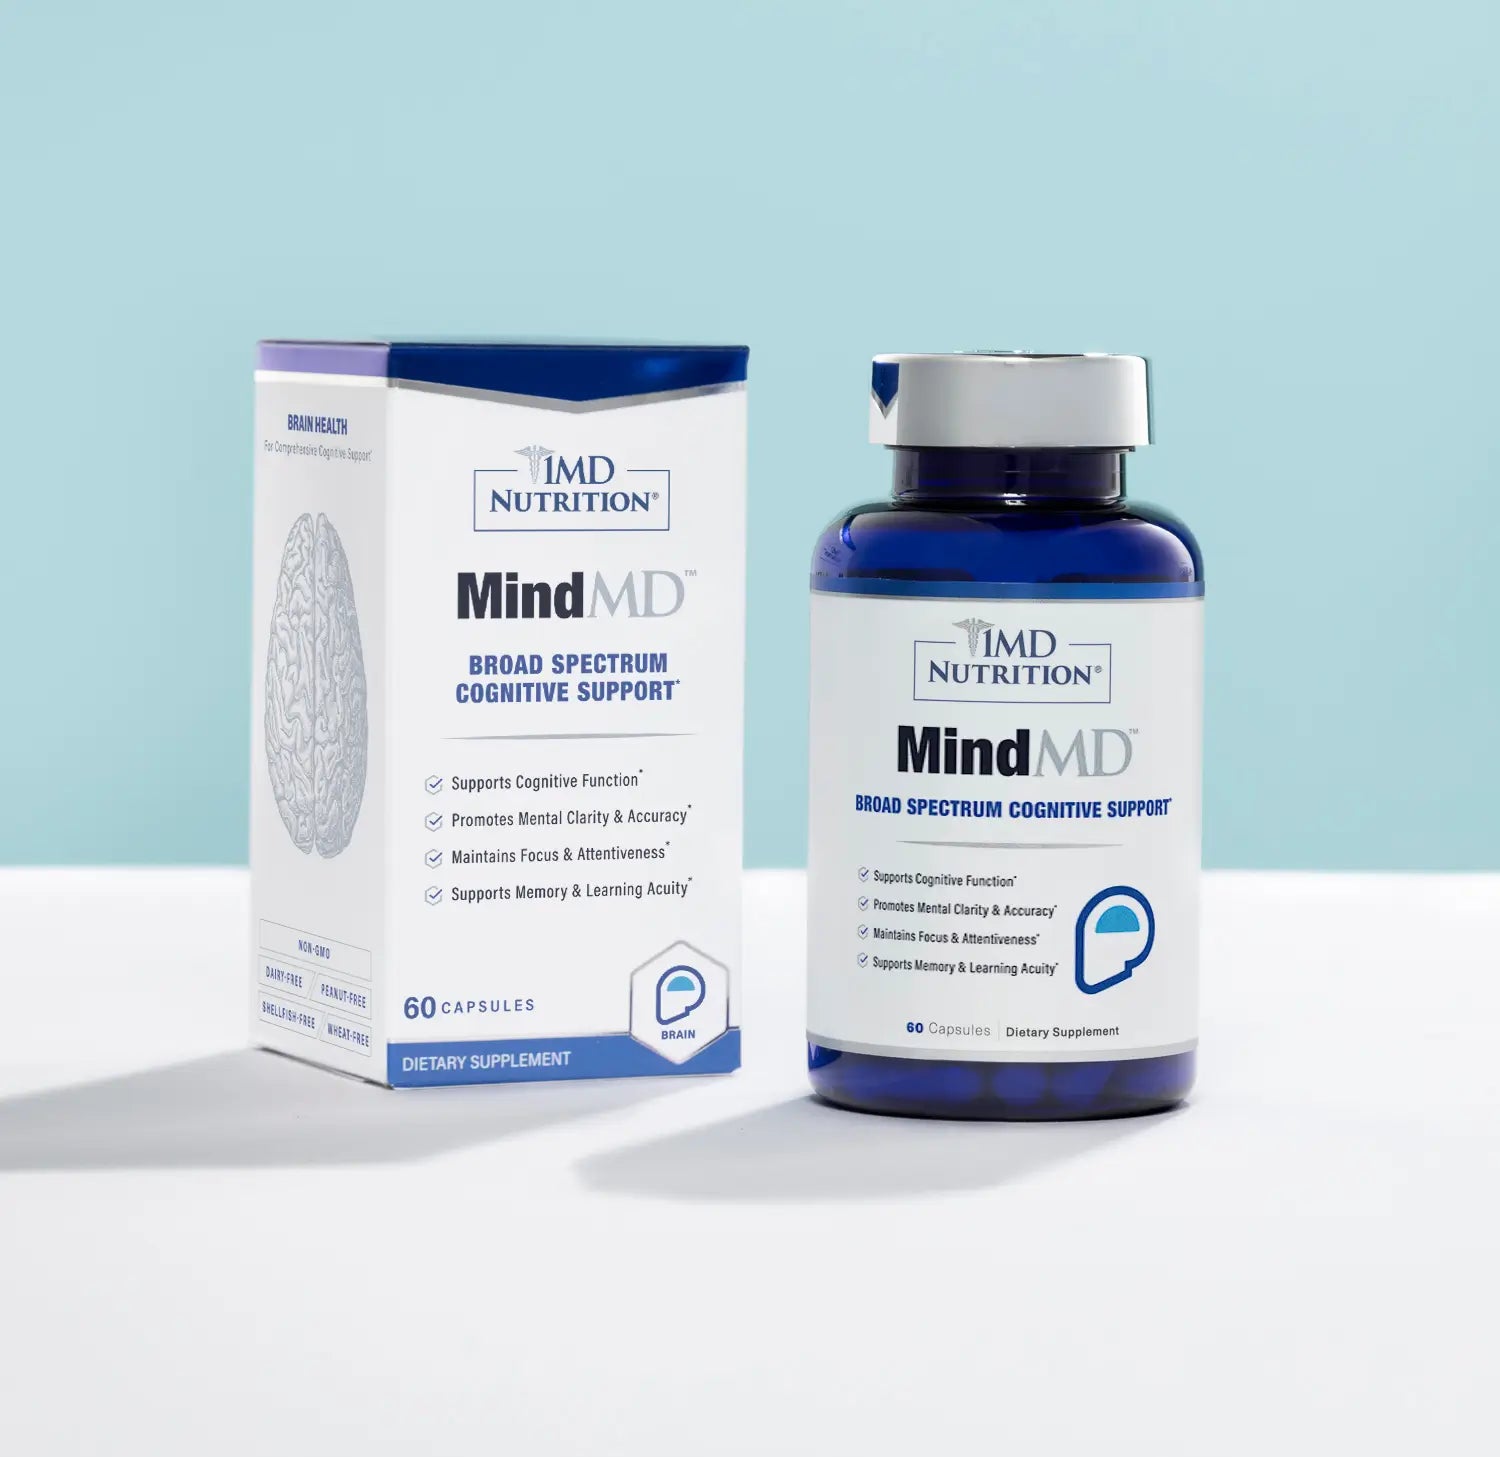 1MD Nutrition MindMD box &amp; bottle